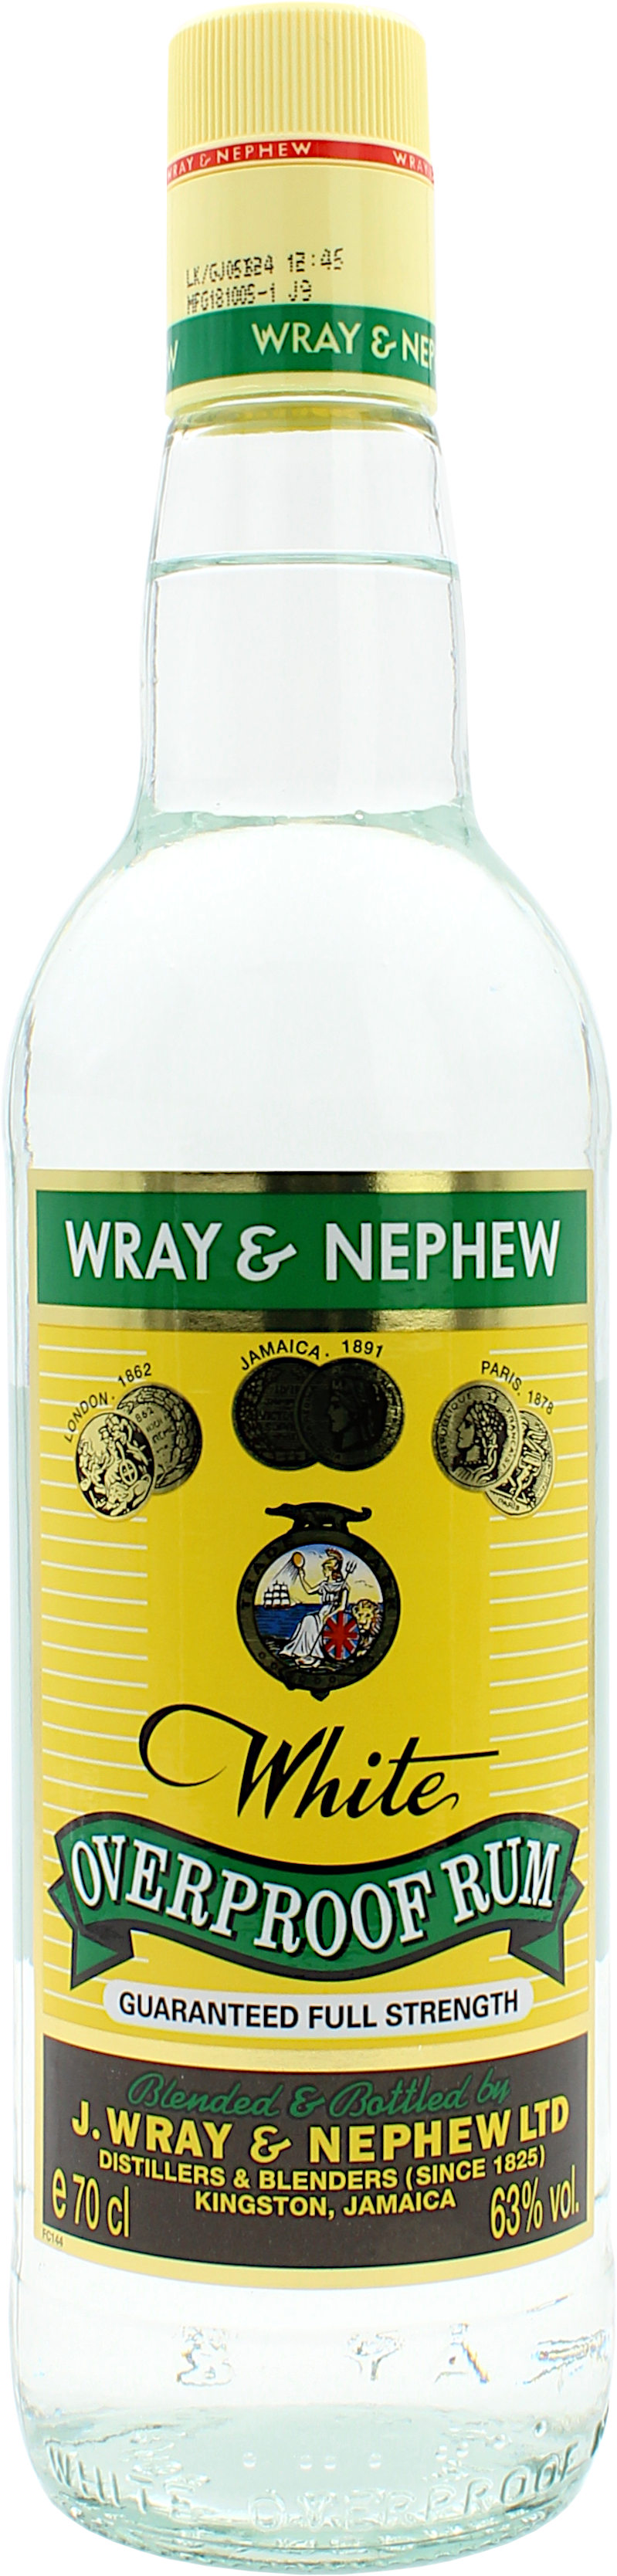 Wray & Nephew White Overproof Rum 63.0% 0,7l